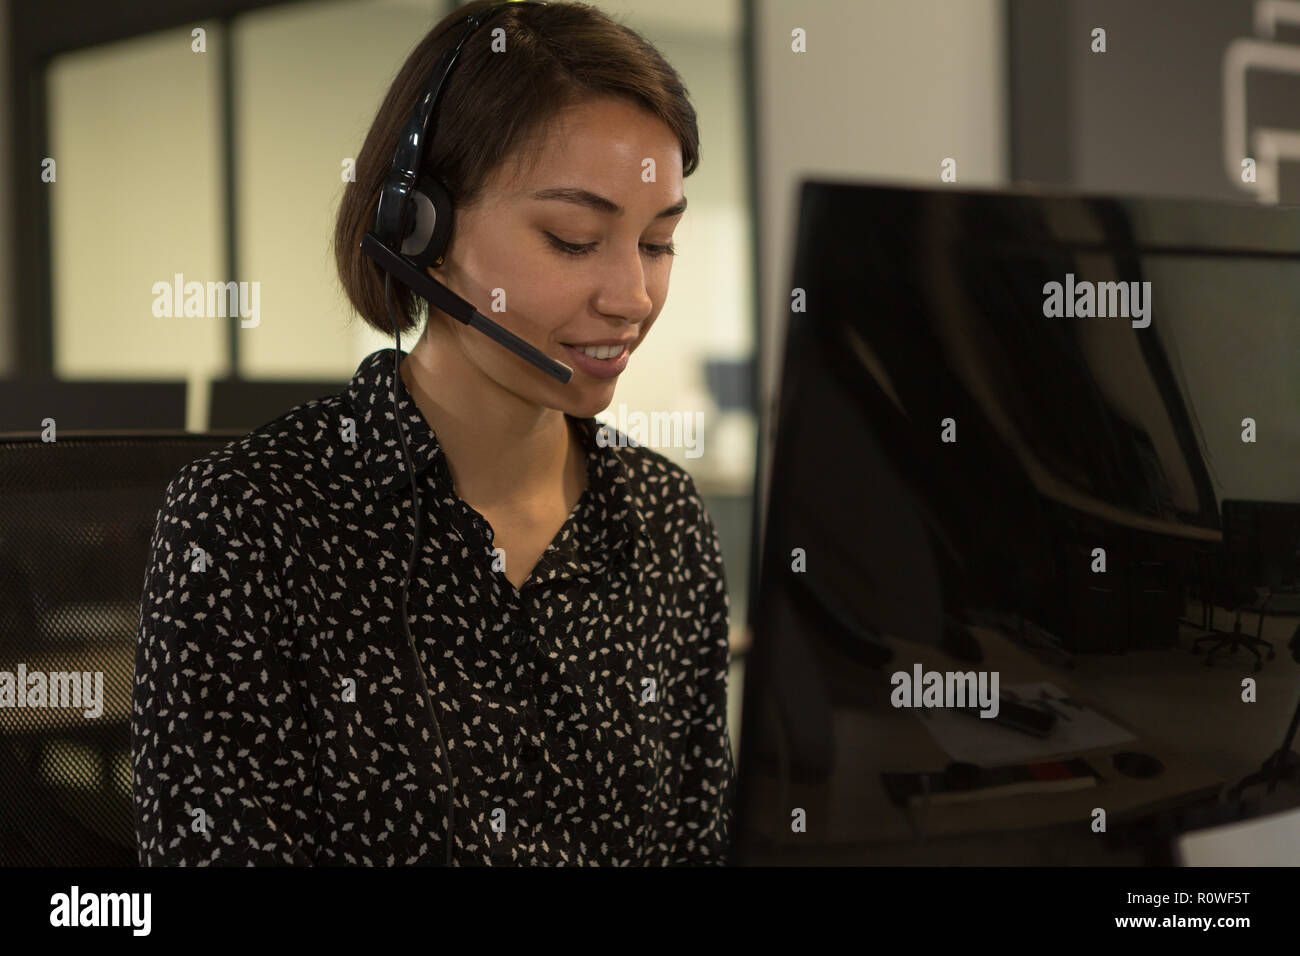 Customer service executive talking on headset at desk Stock Photo - Alamy